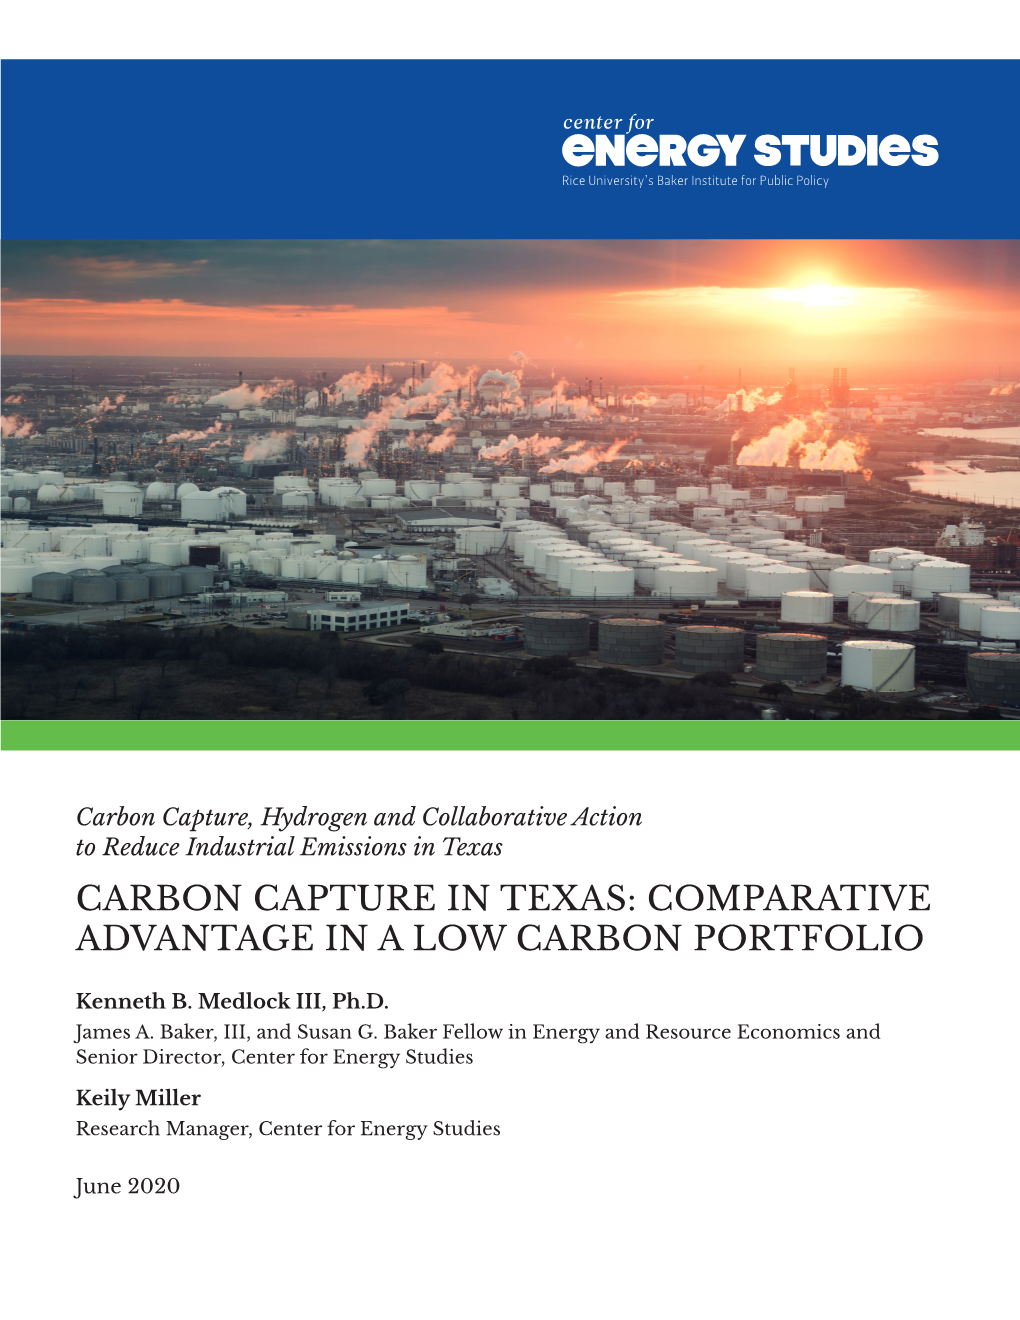 Carbon Capture in Texas: Comparative Advantage in a Low Carbon Portfolio